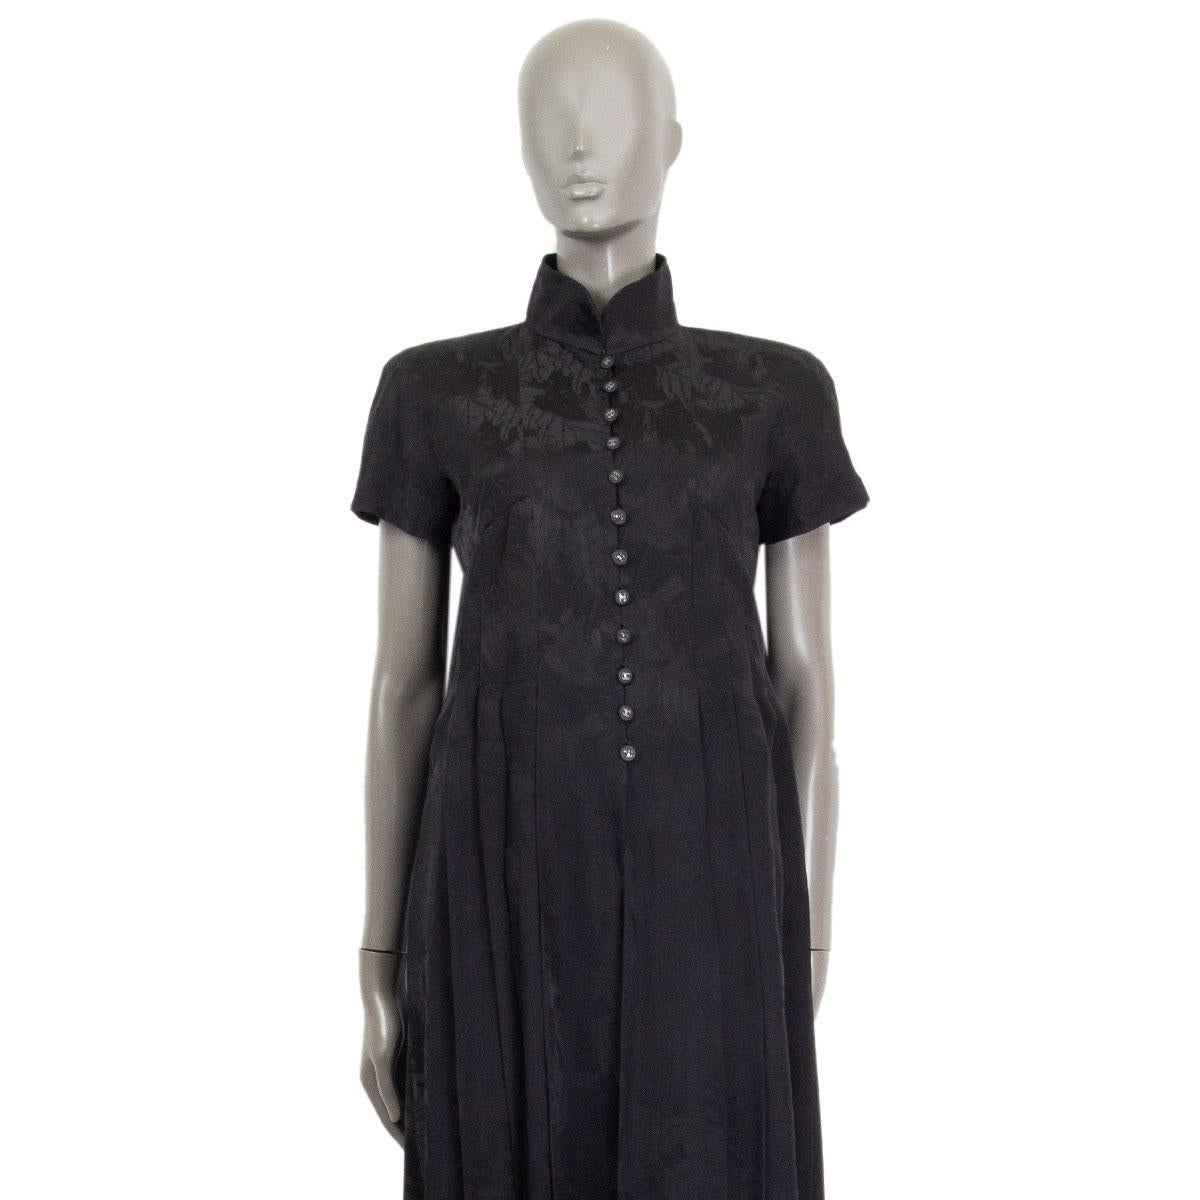 Black CHANEL black silk jacquard Short Sleeve Blouse Dress 38 S